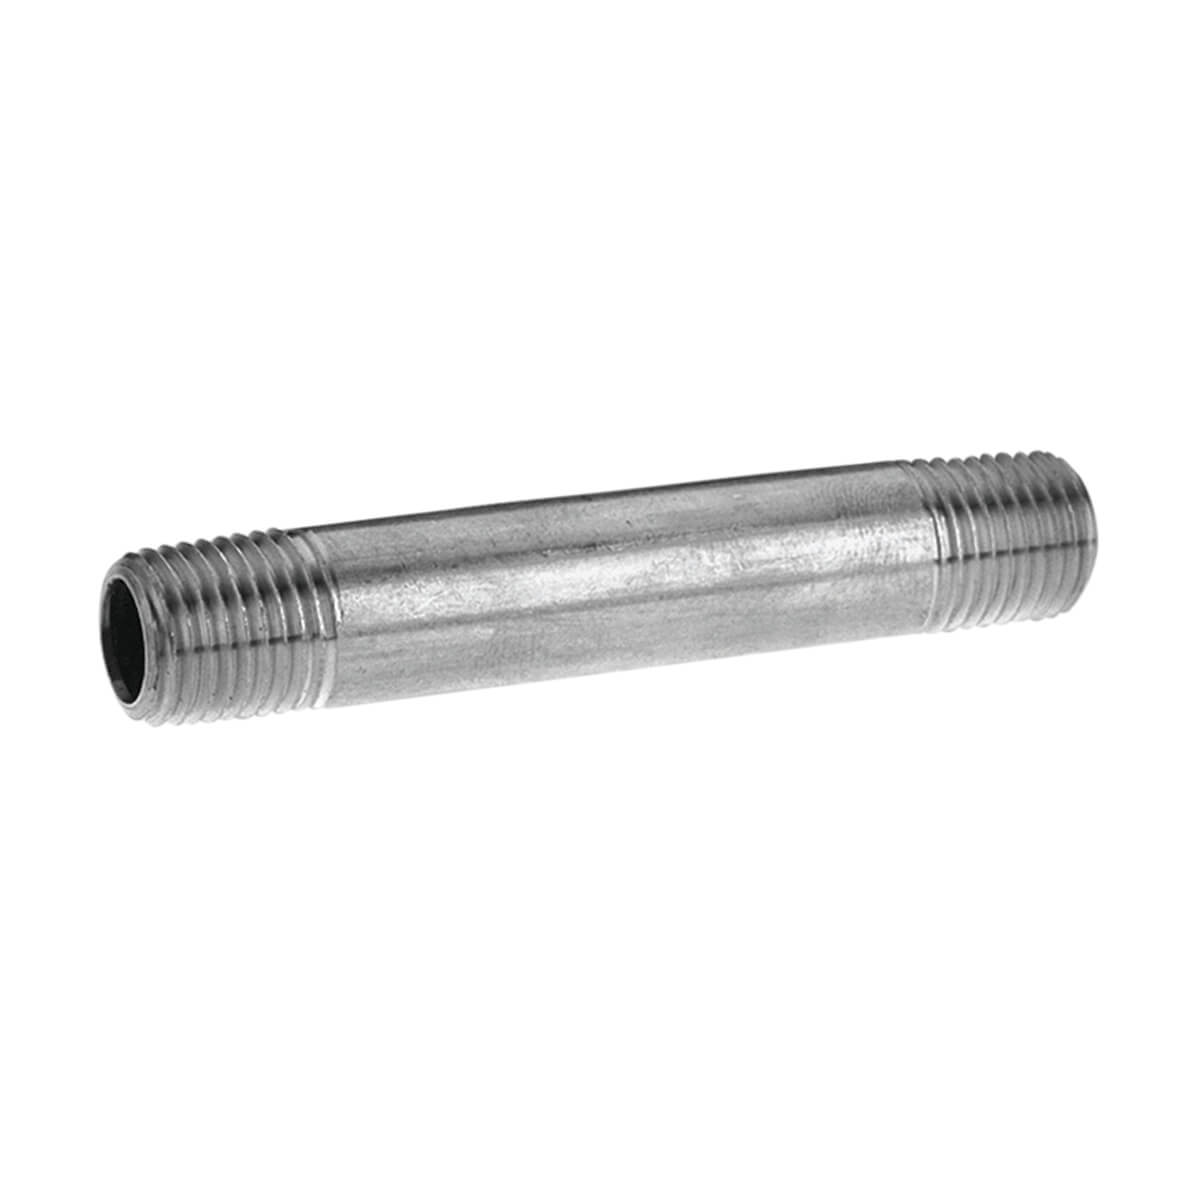 Pipe Nipple Galvanized Steel - 1-in x 30-in